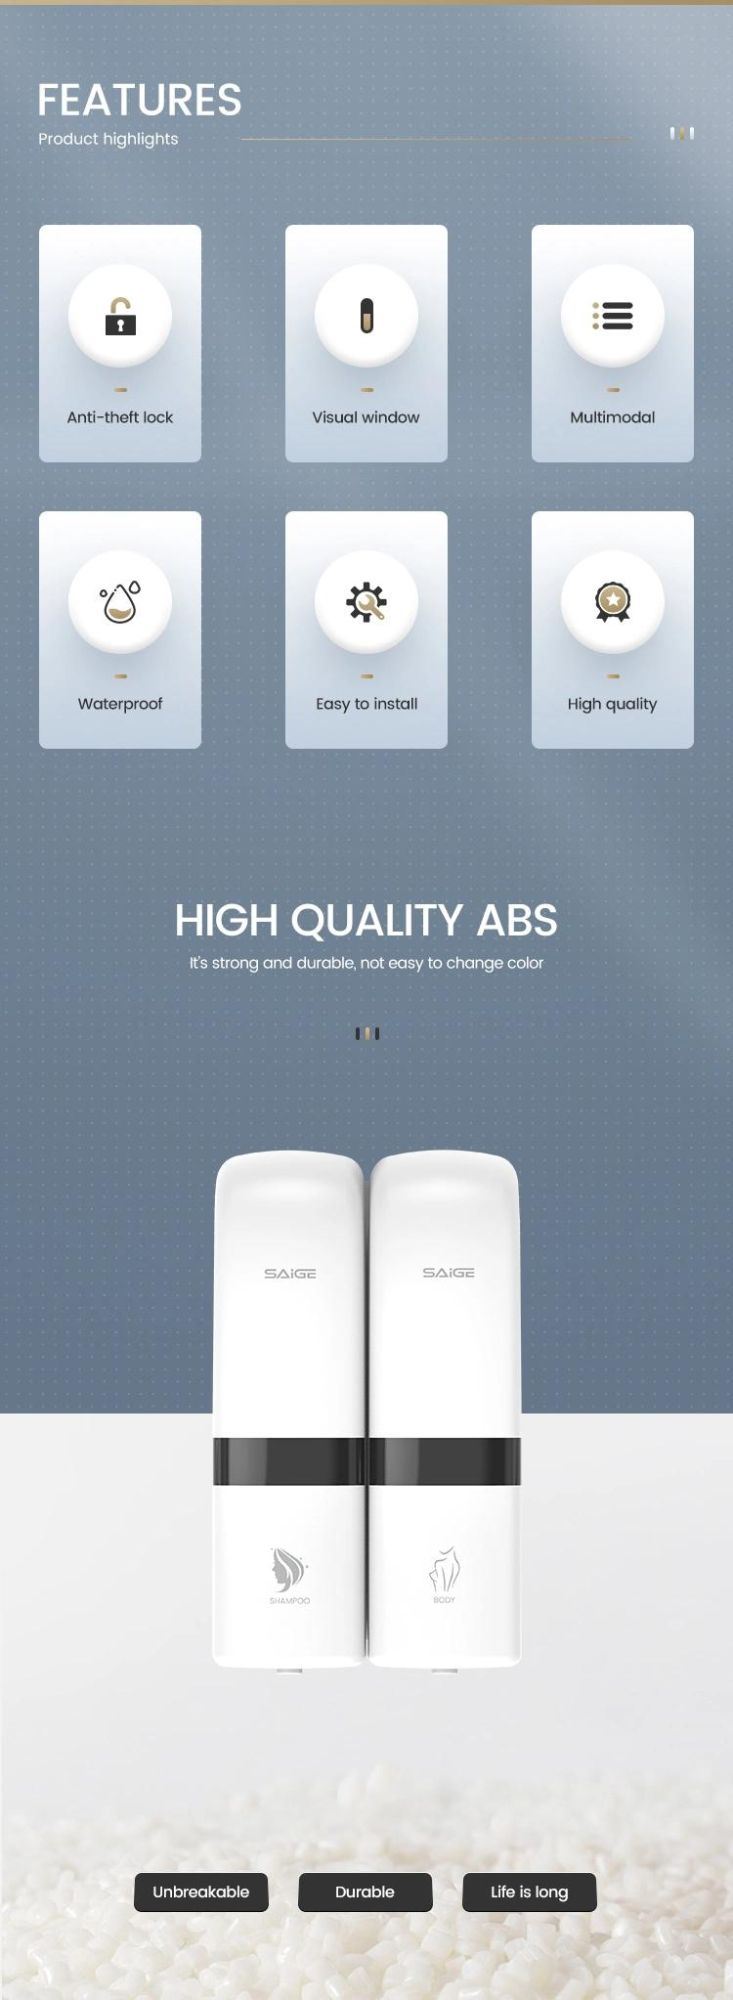 Saige Bathroom 200ml*3 Wall Mounted ABS Plastic Manual Soap Dispensers for Shampoo